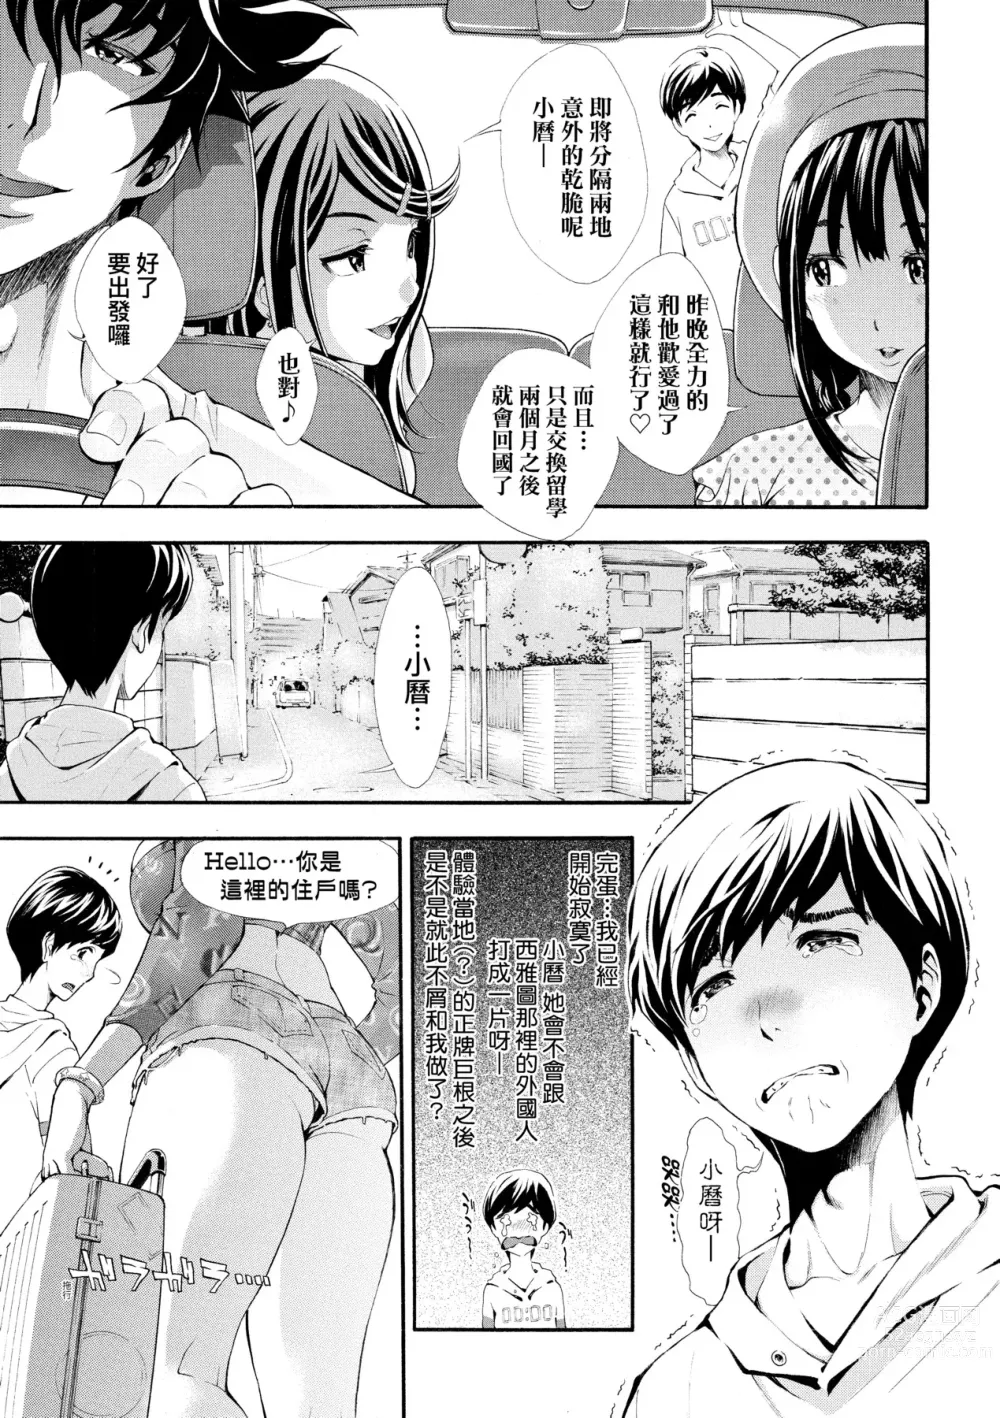 Page 196 of manga 對不起嘛...慾火焚身就是想要 (decensored)